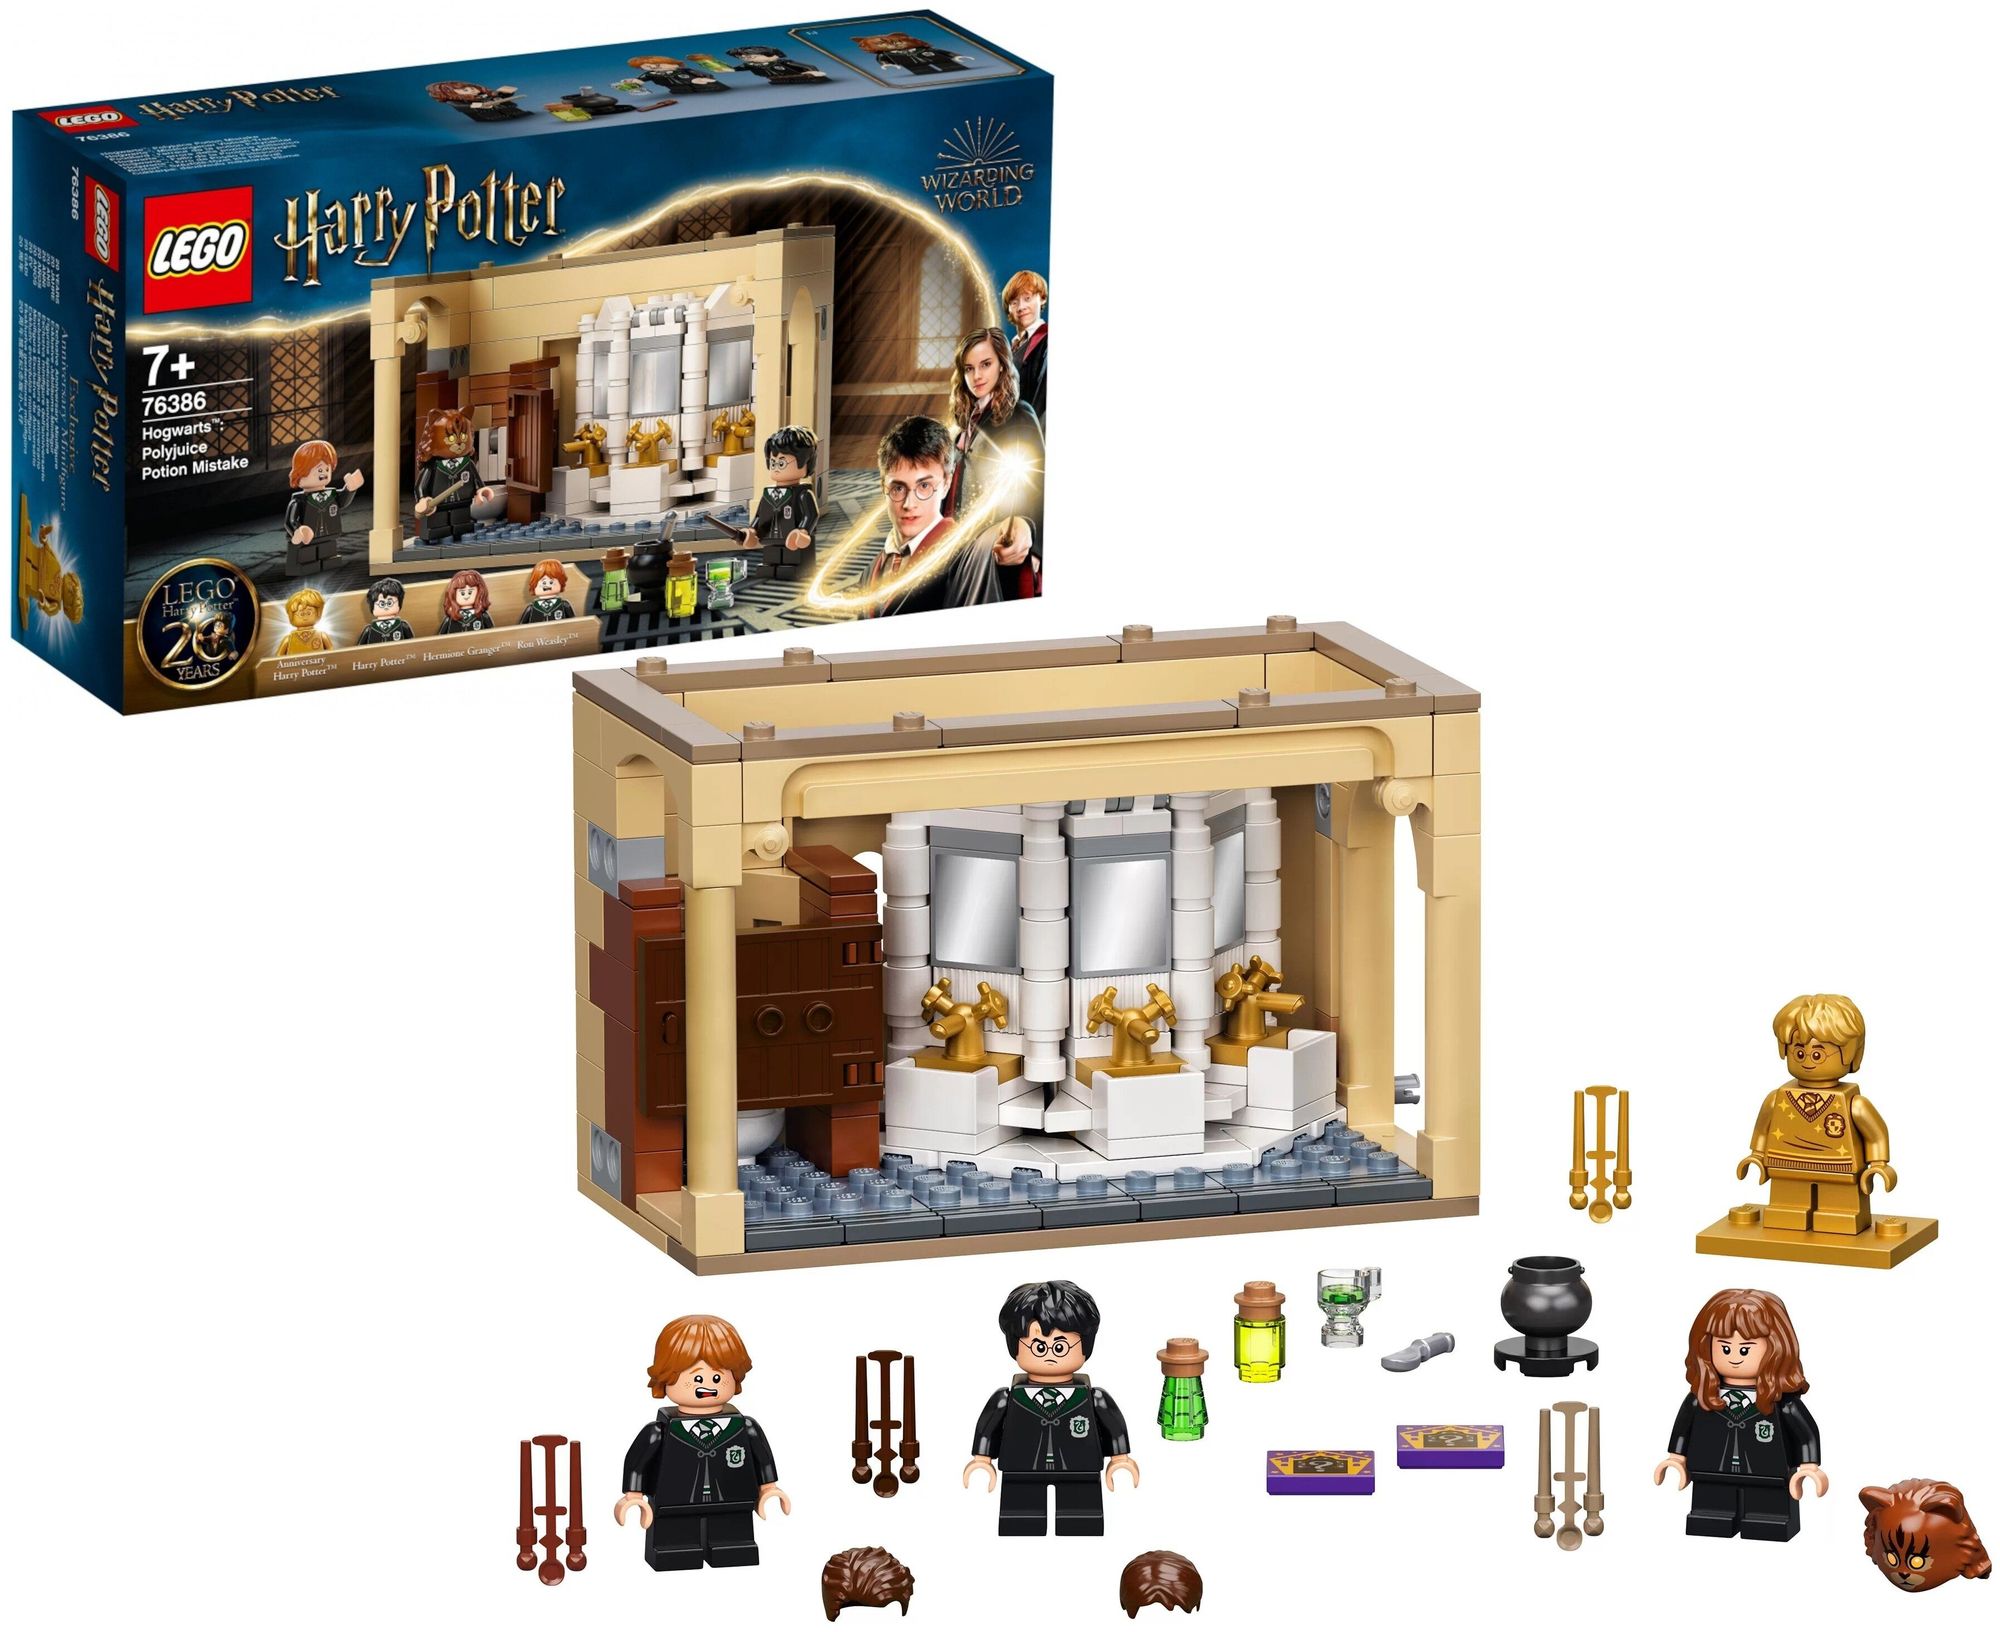 Конструктор Lego Harry Potter Hogwarts: Polyjuice Potion Mistake пластик (76386) конструктор lego harry potter 76389 хогвартс тайная комната